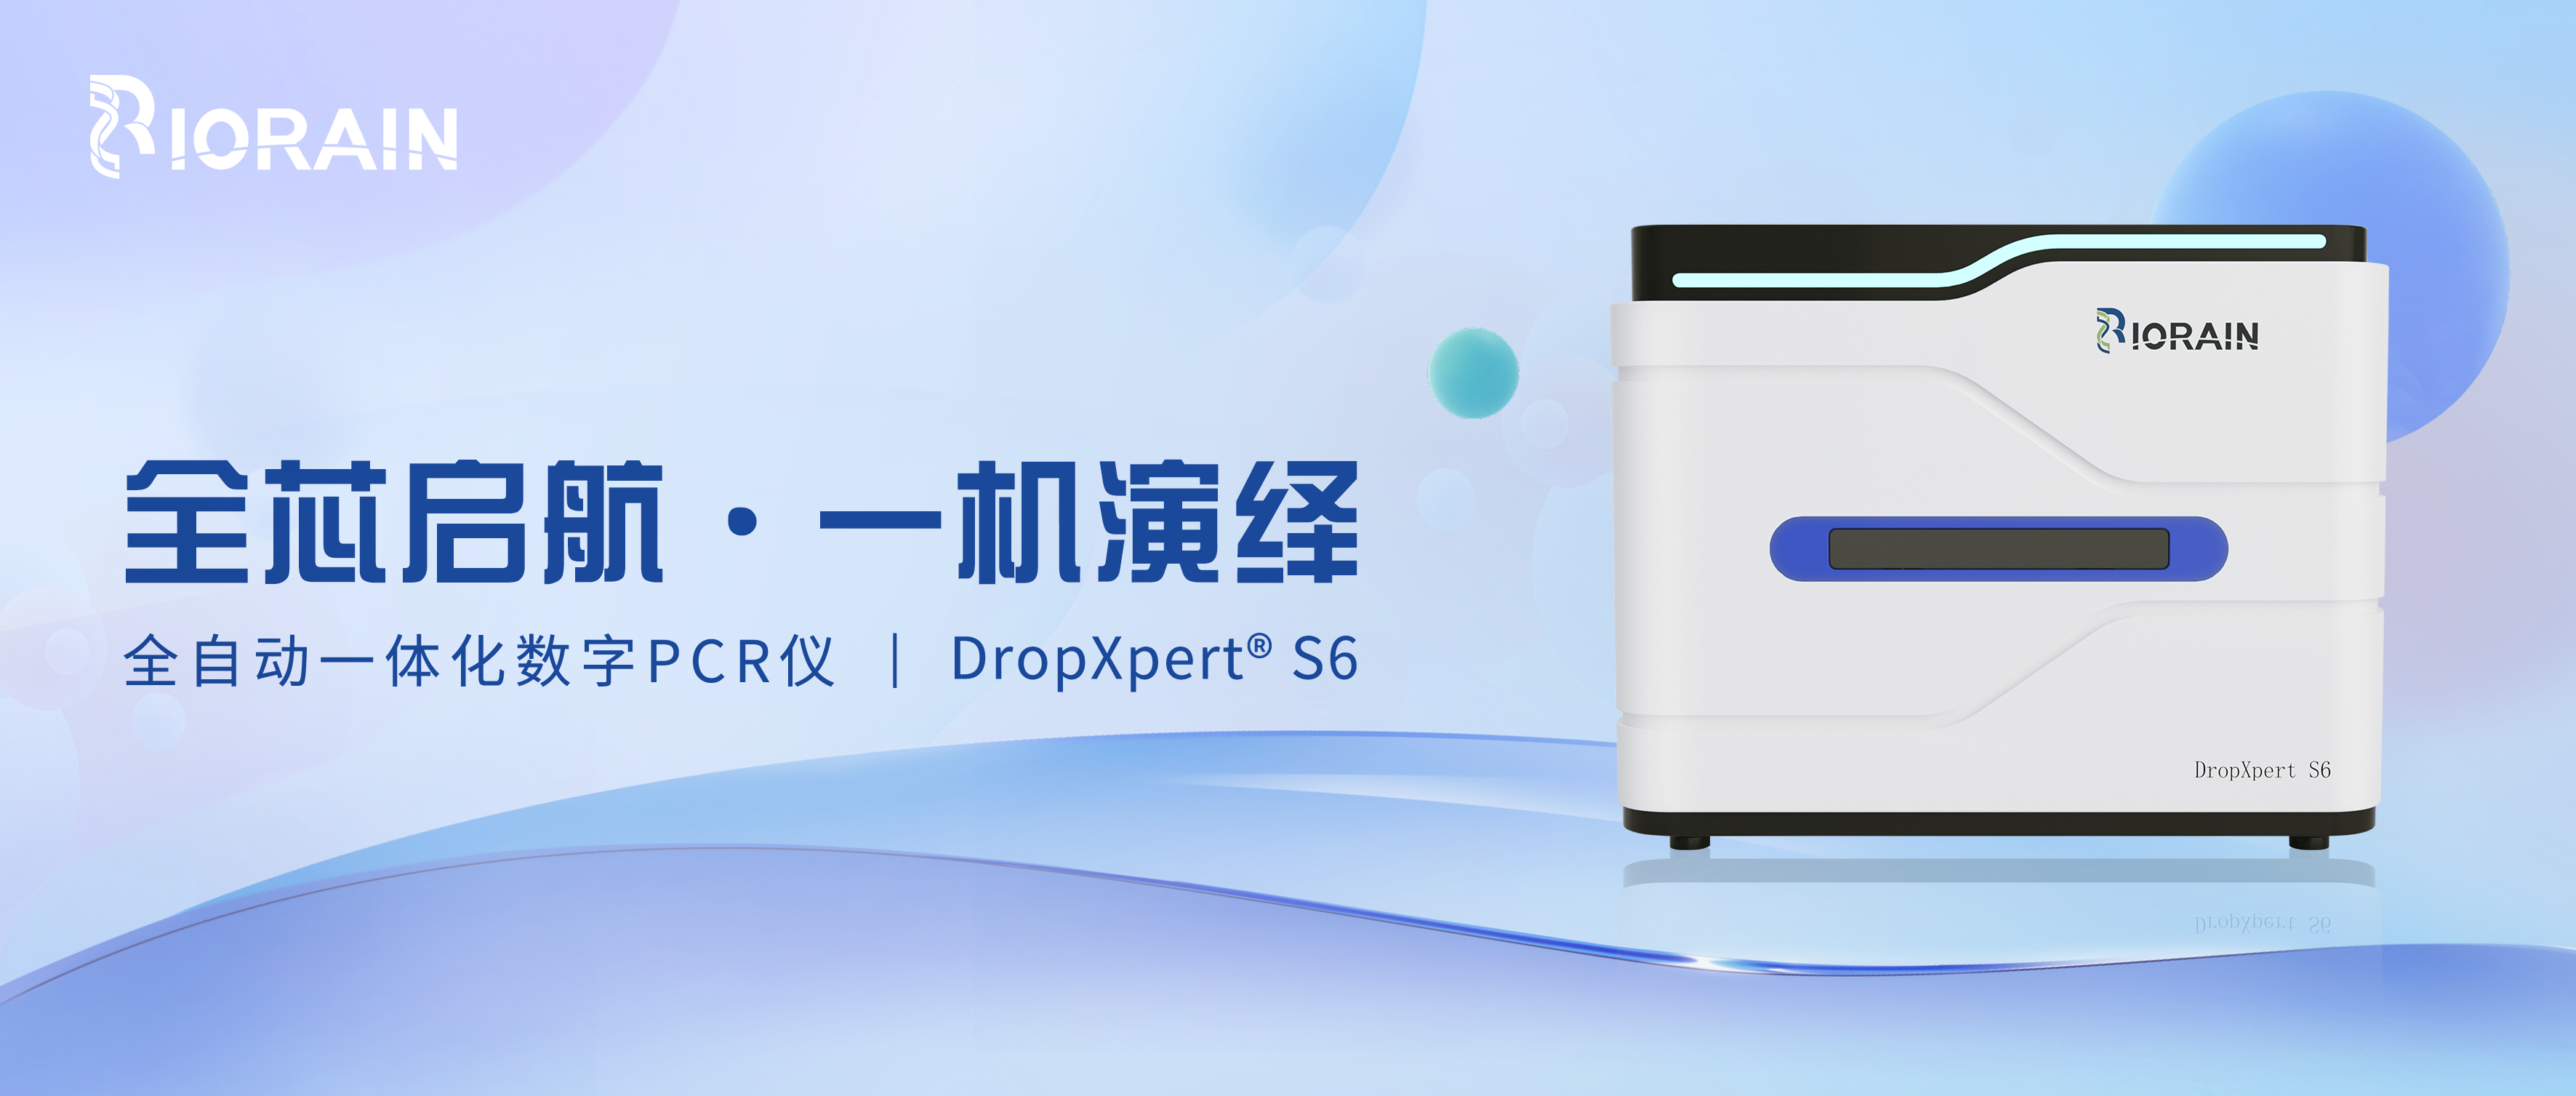 Biorain Biological DropXpert S6 Digital PCR System Helps the Development of Precision Medicine